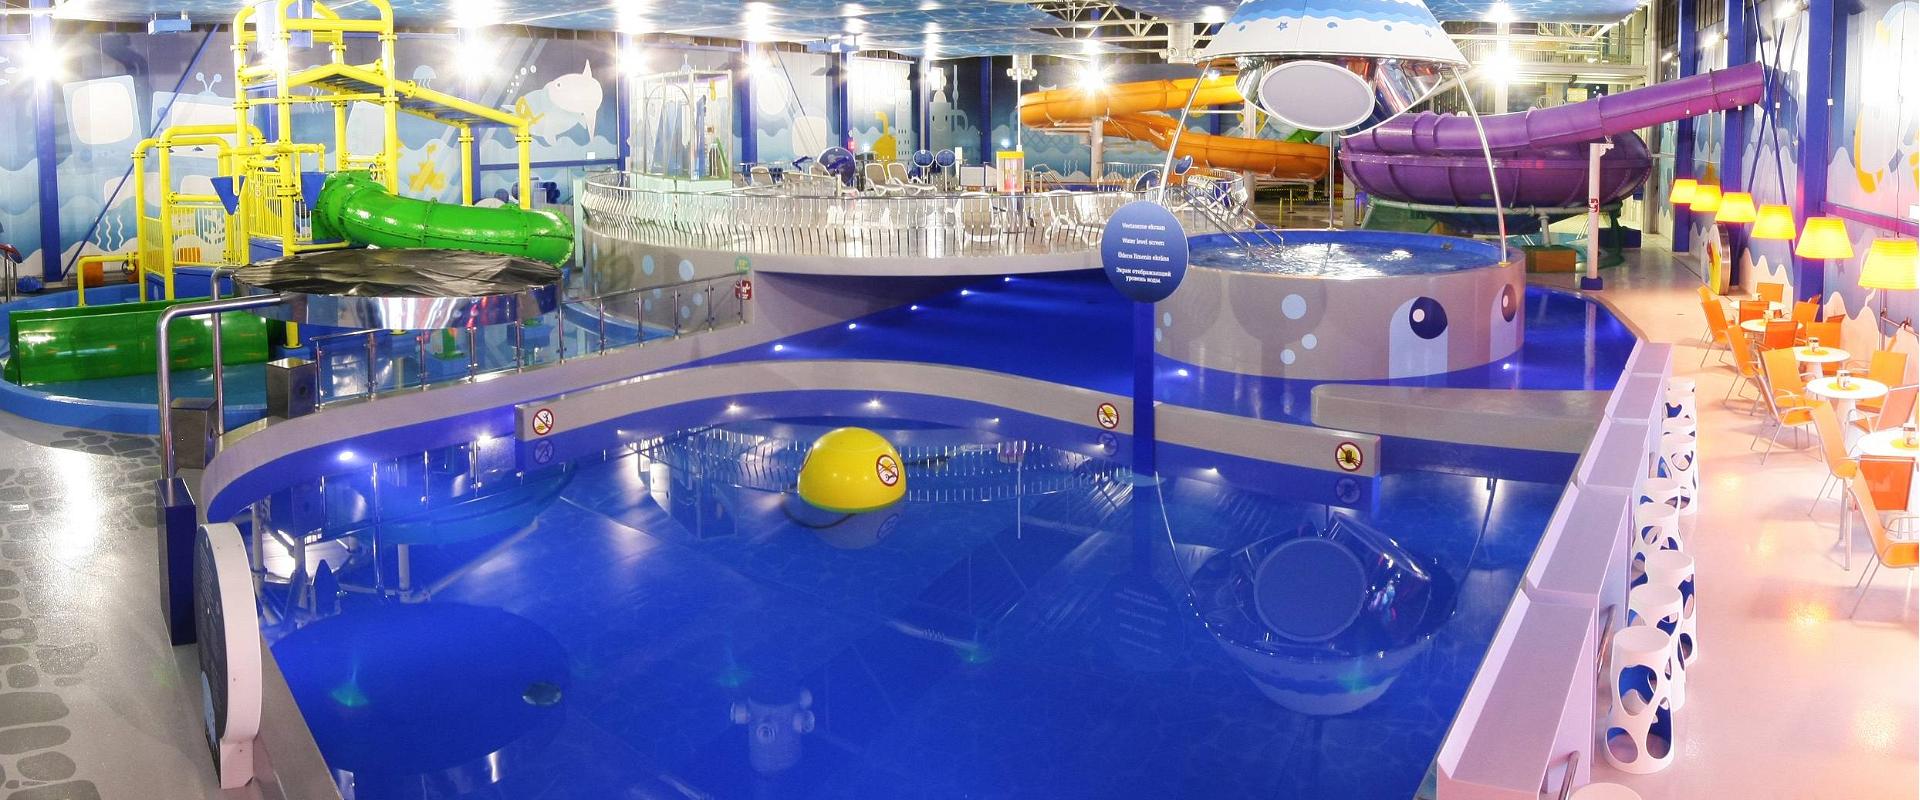 Tallinn Viimsi Spa Hotel & Aquapark